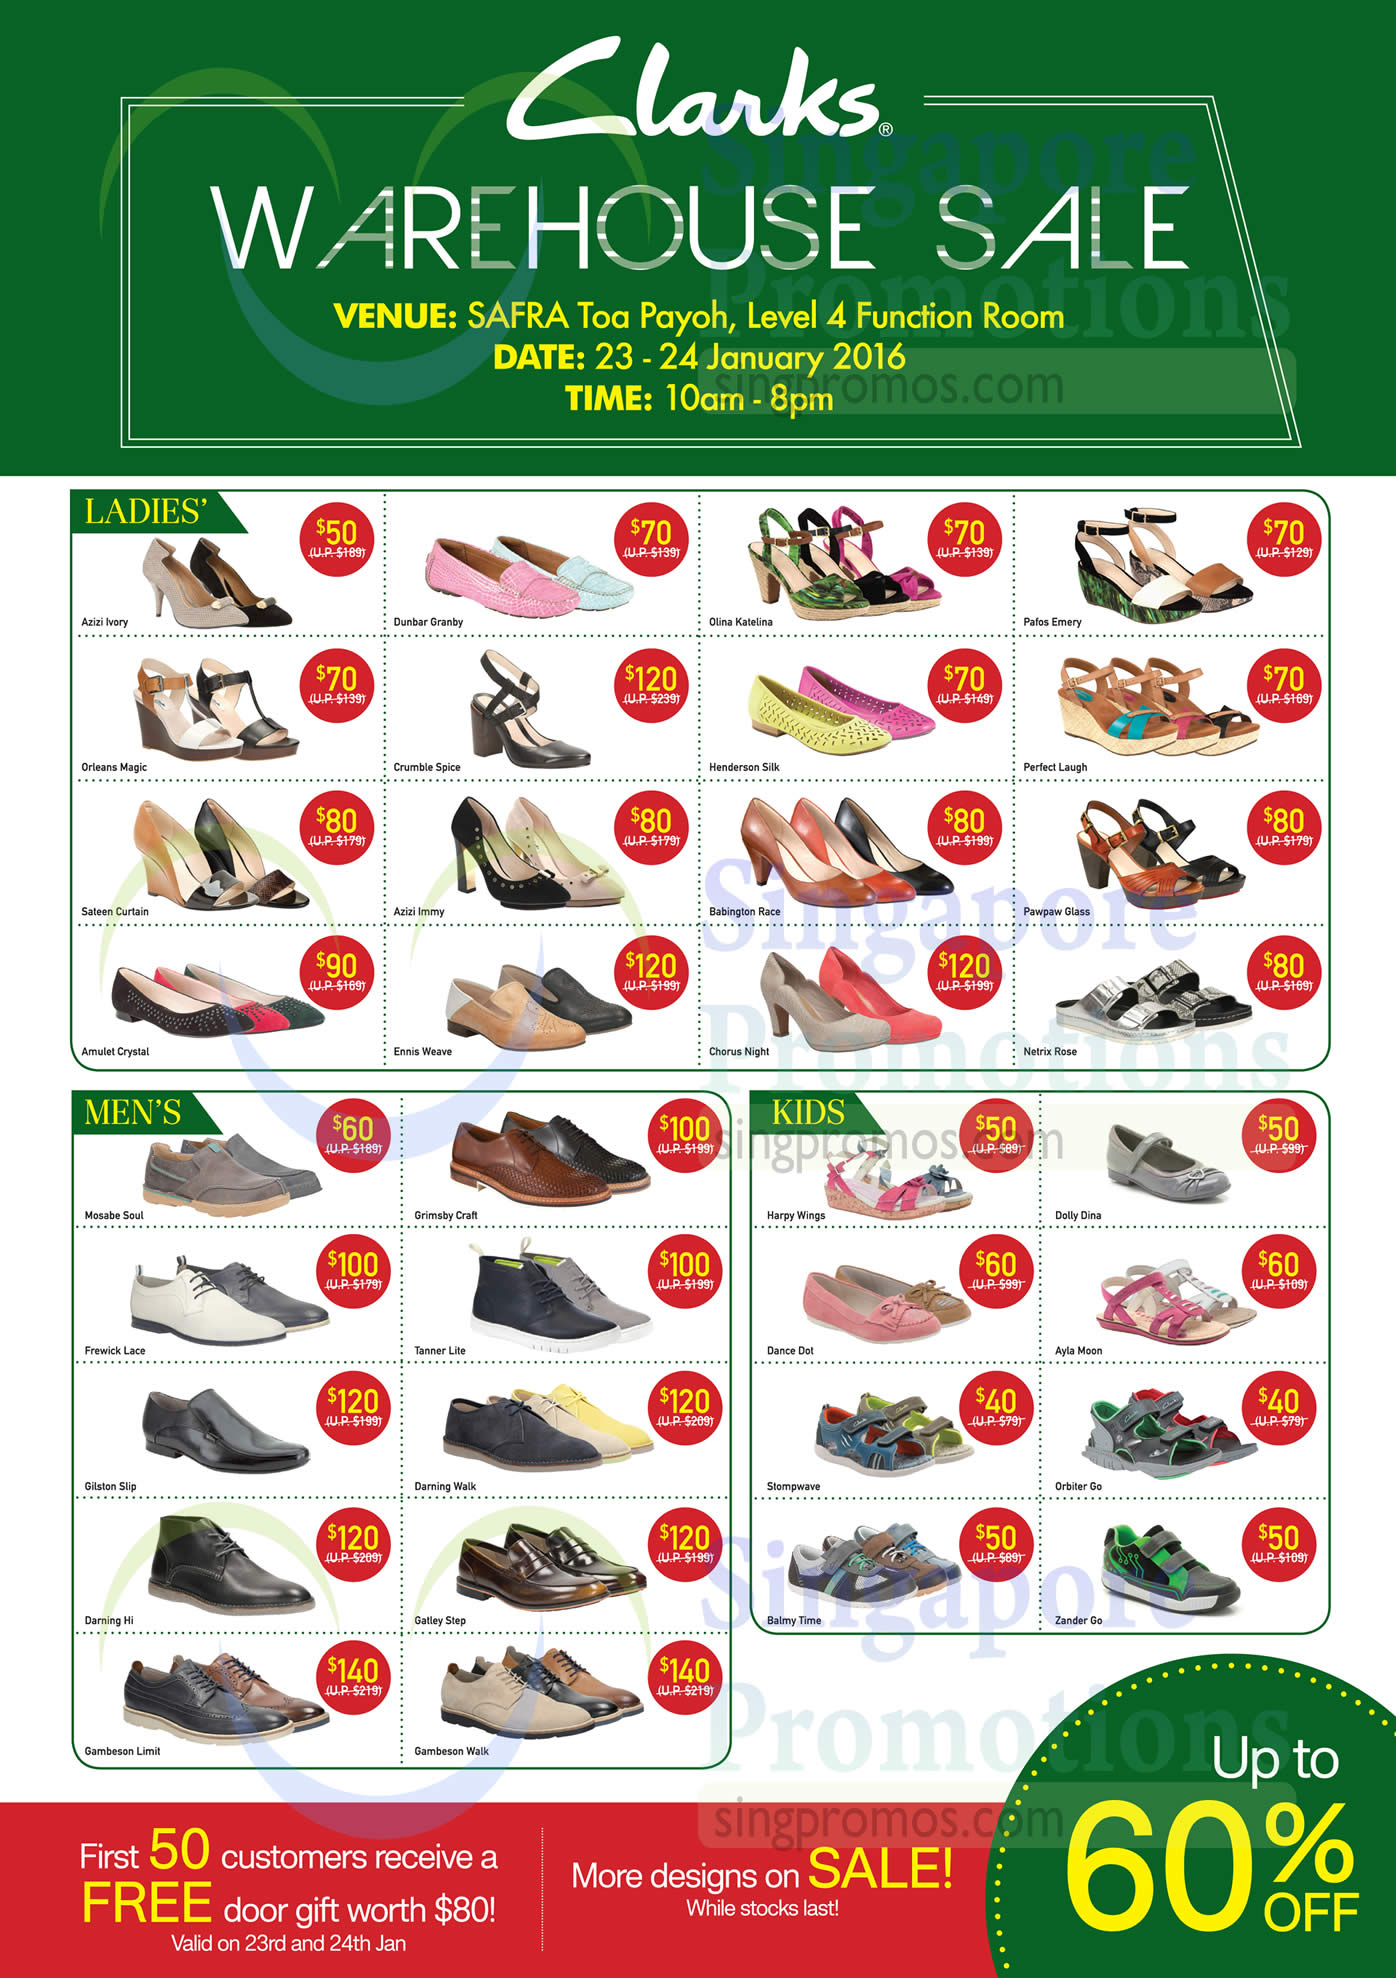 clarks shoes warehouse sale malaysia 2013